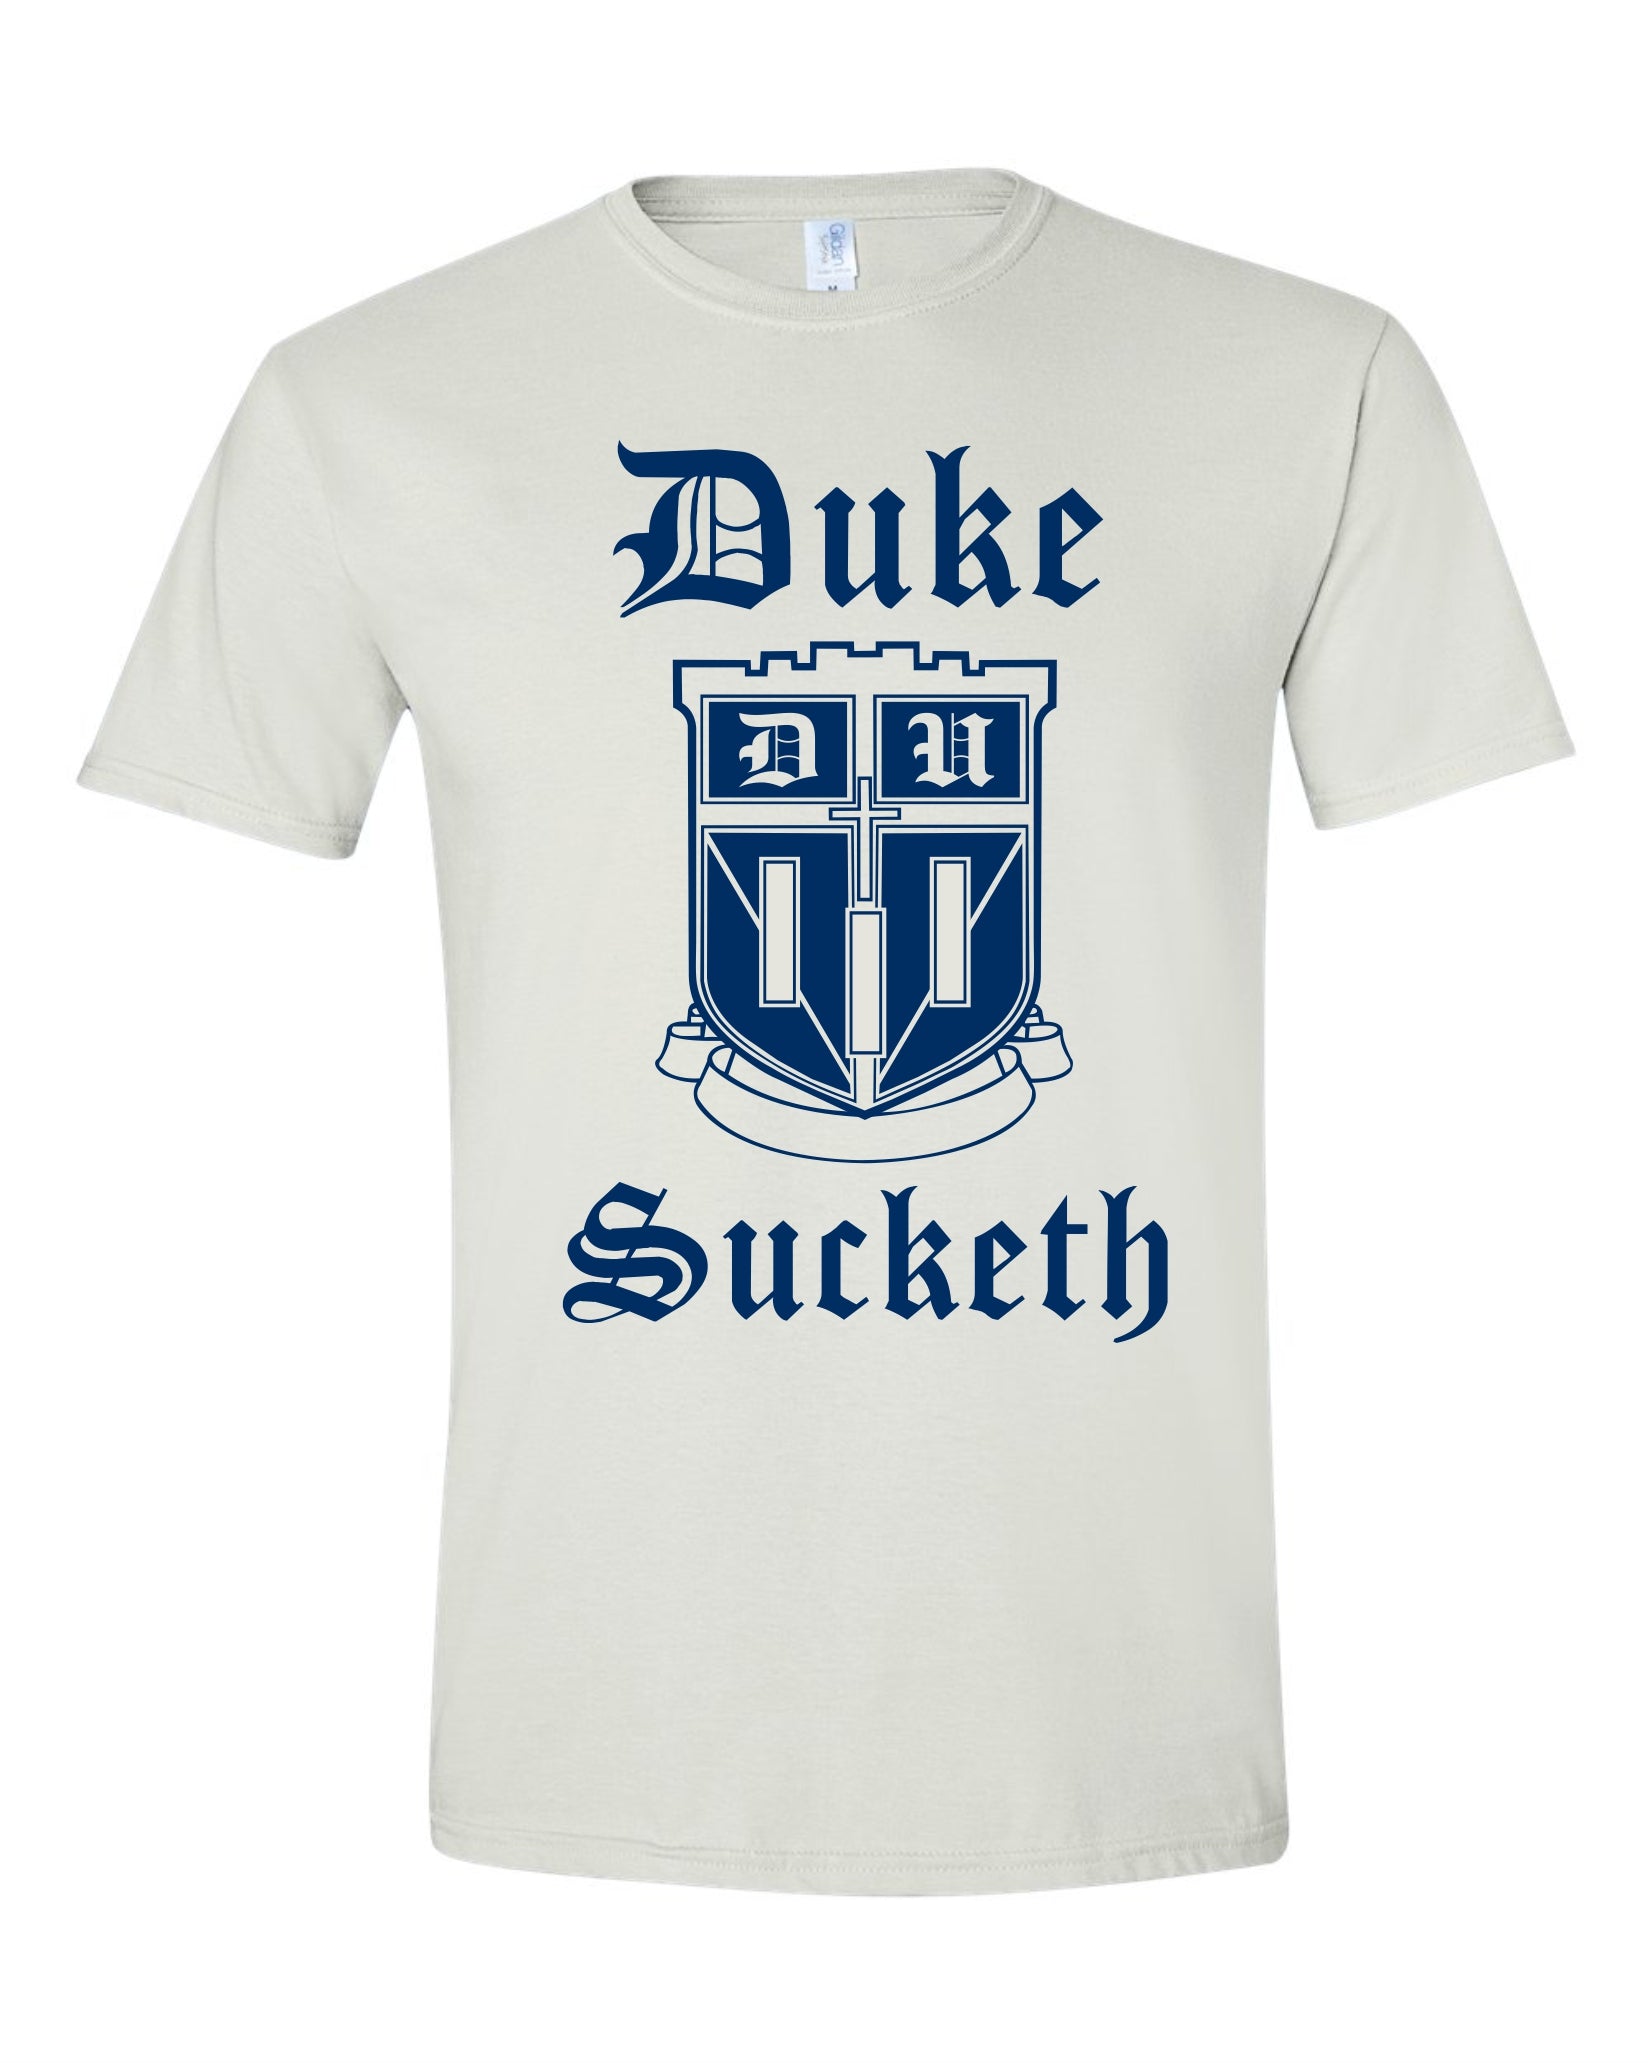 Duke Sucketh T-shirt